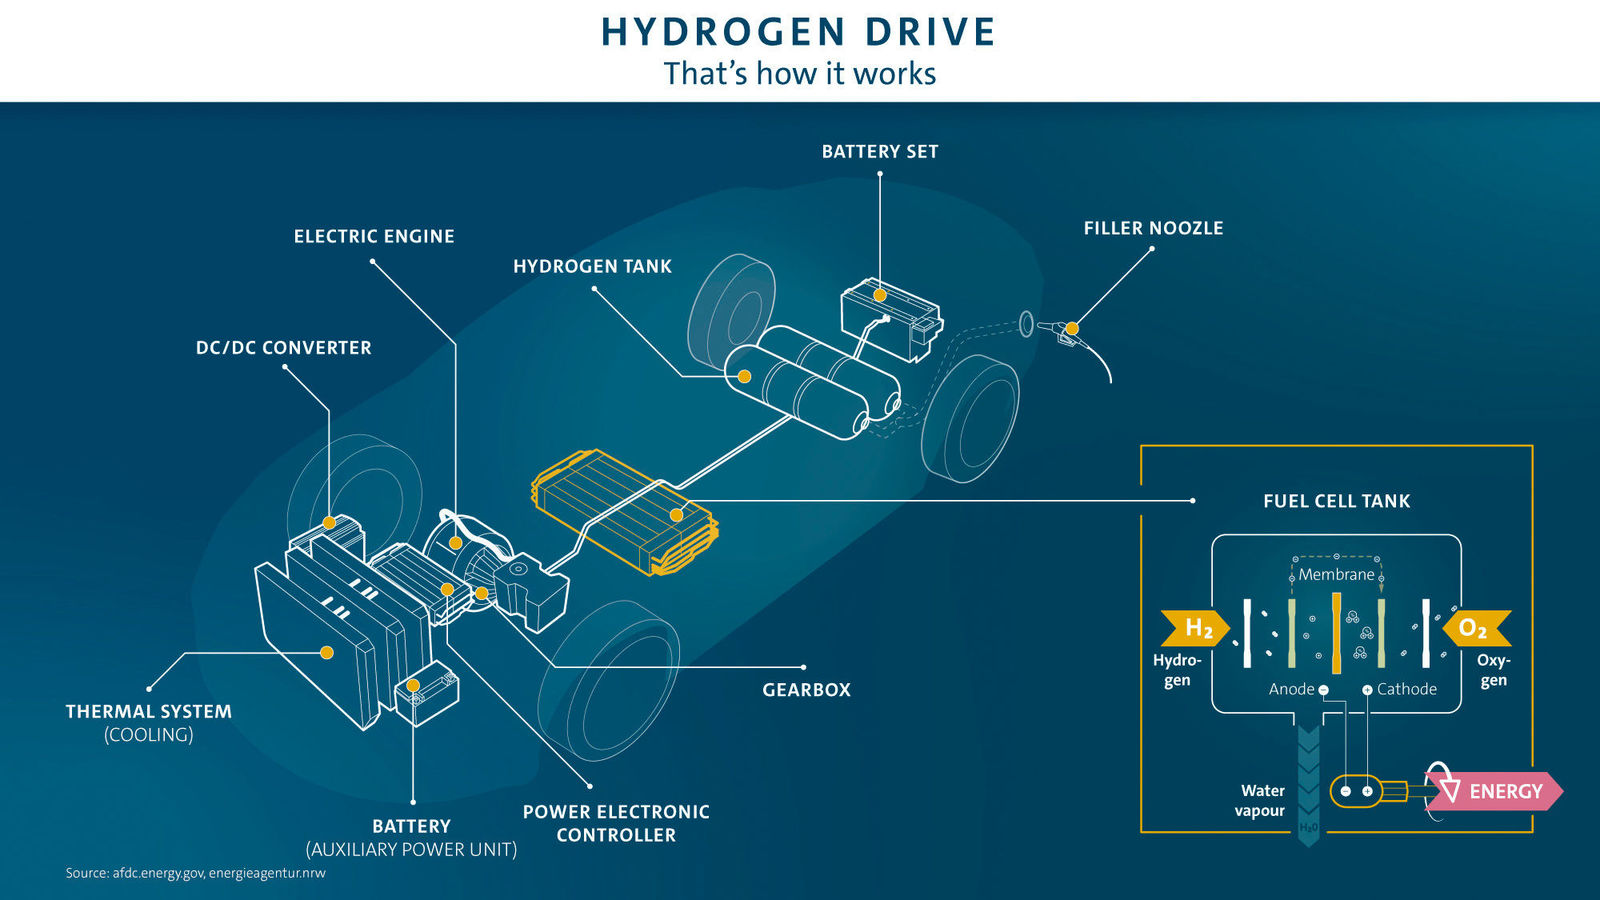 Story "Hydrogen or battery?"